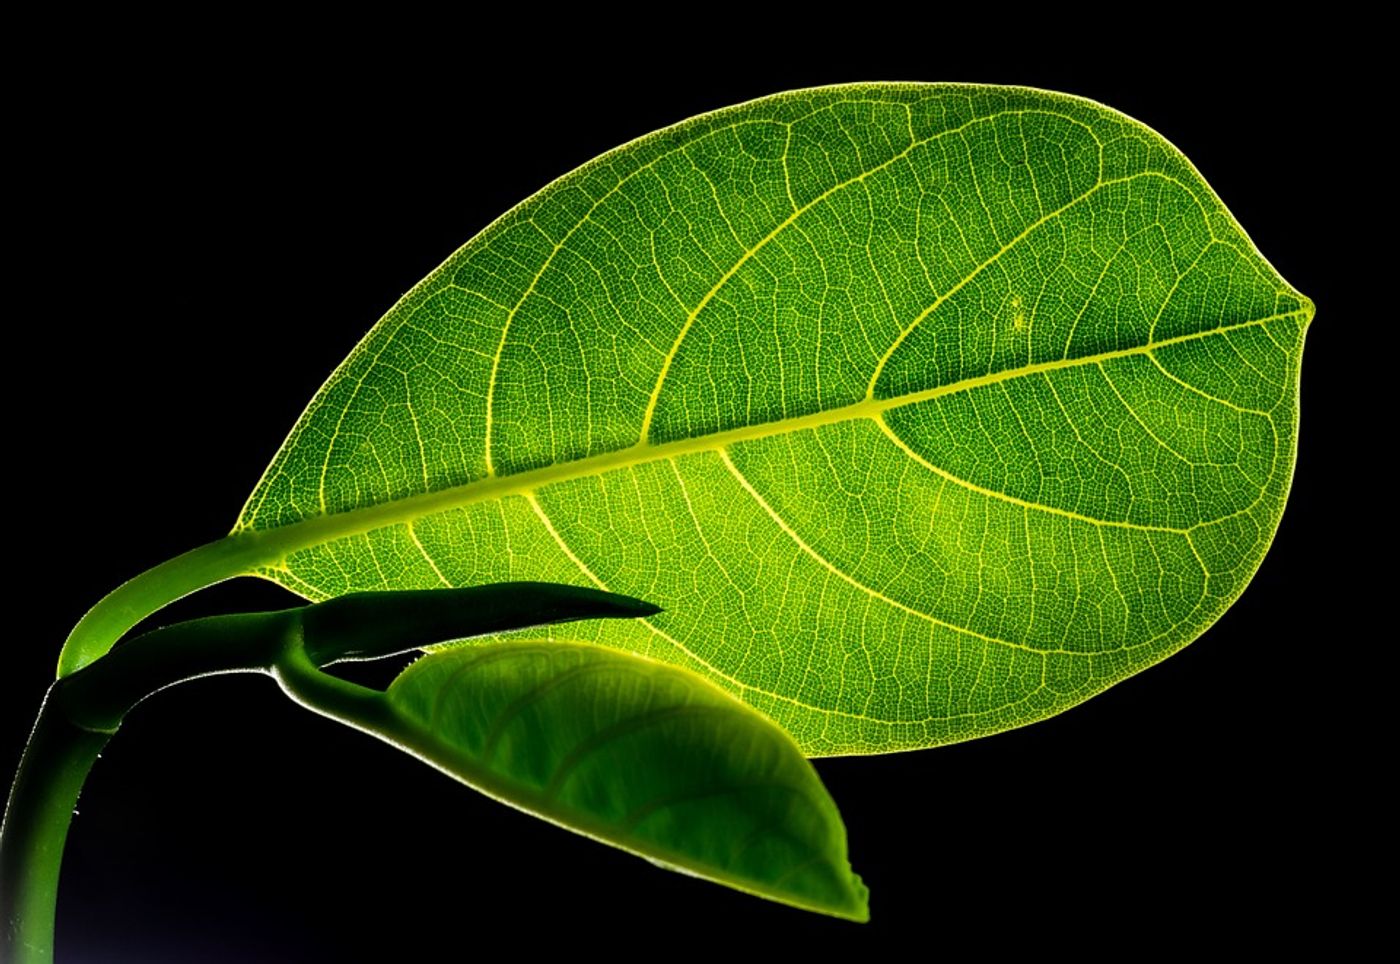 A close-up image of a plant leaf.